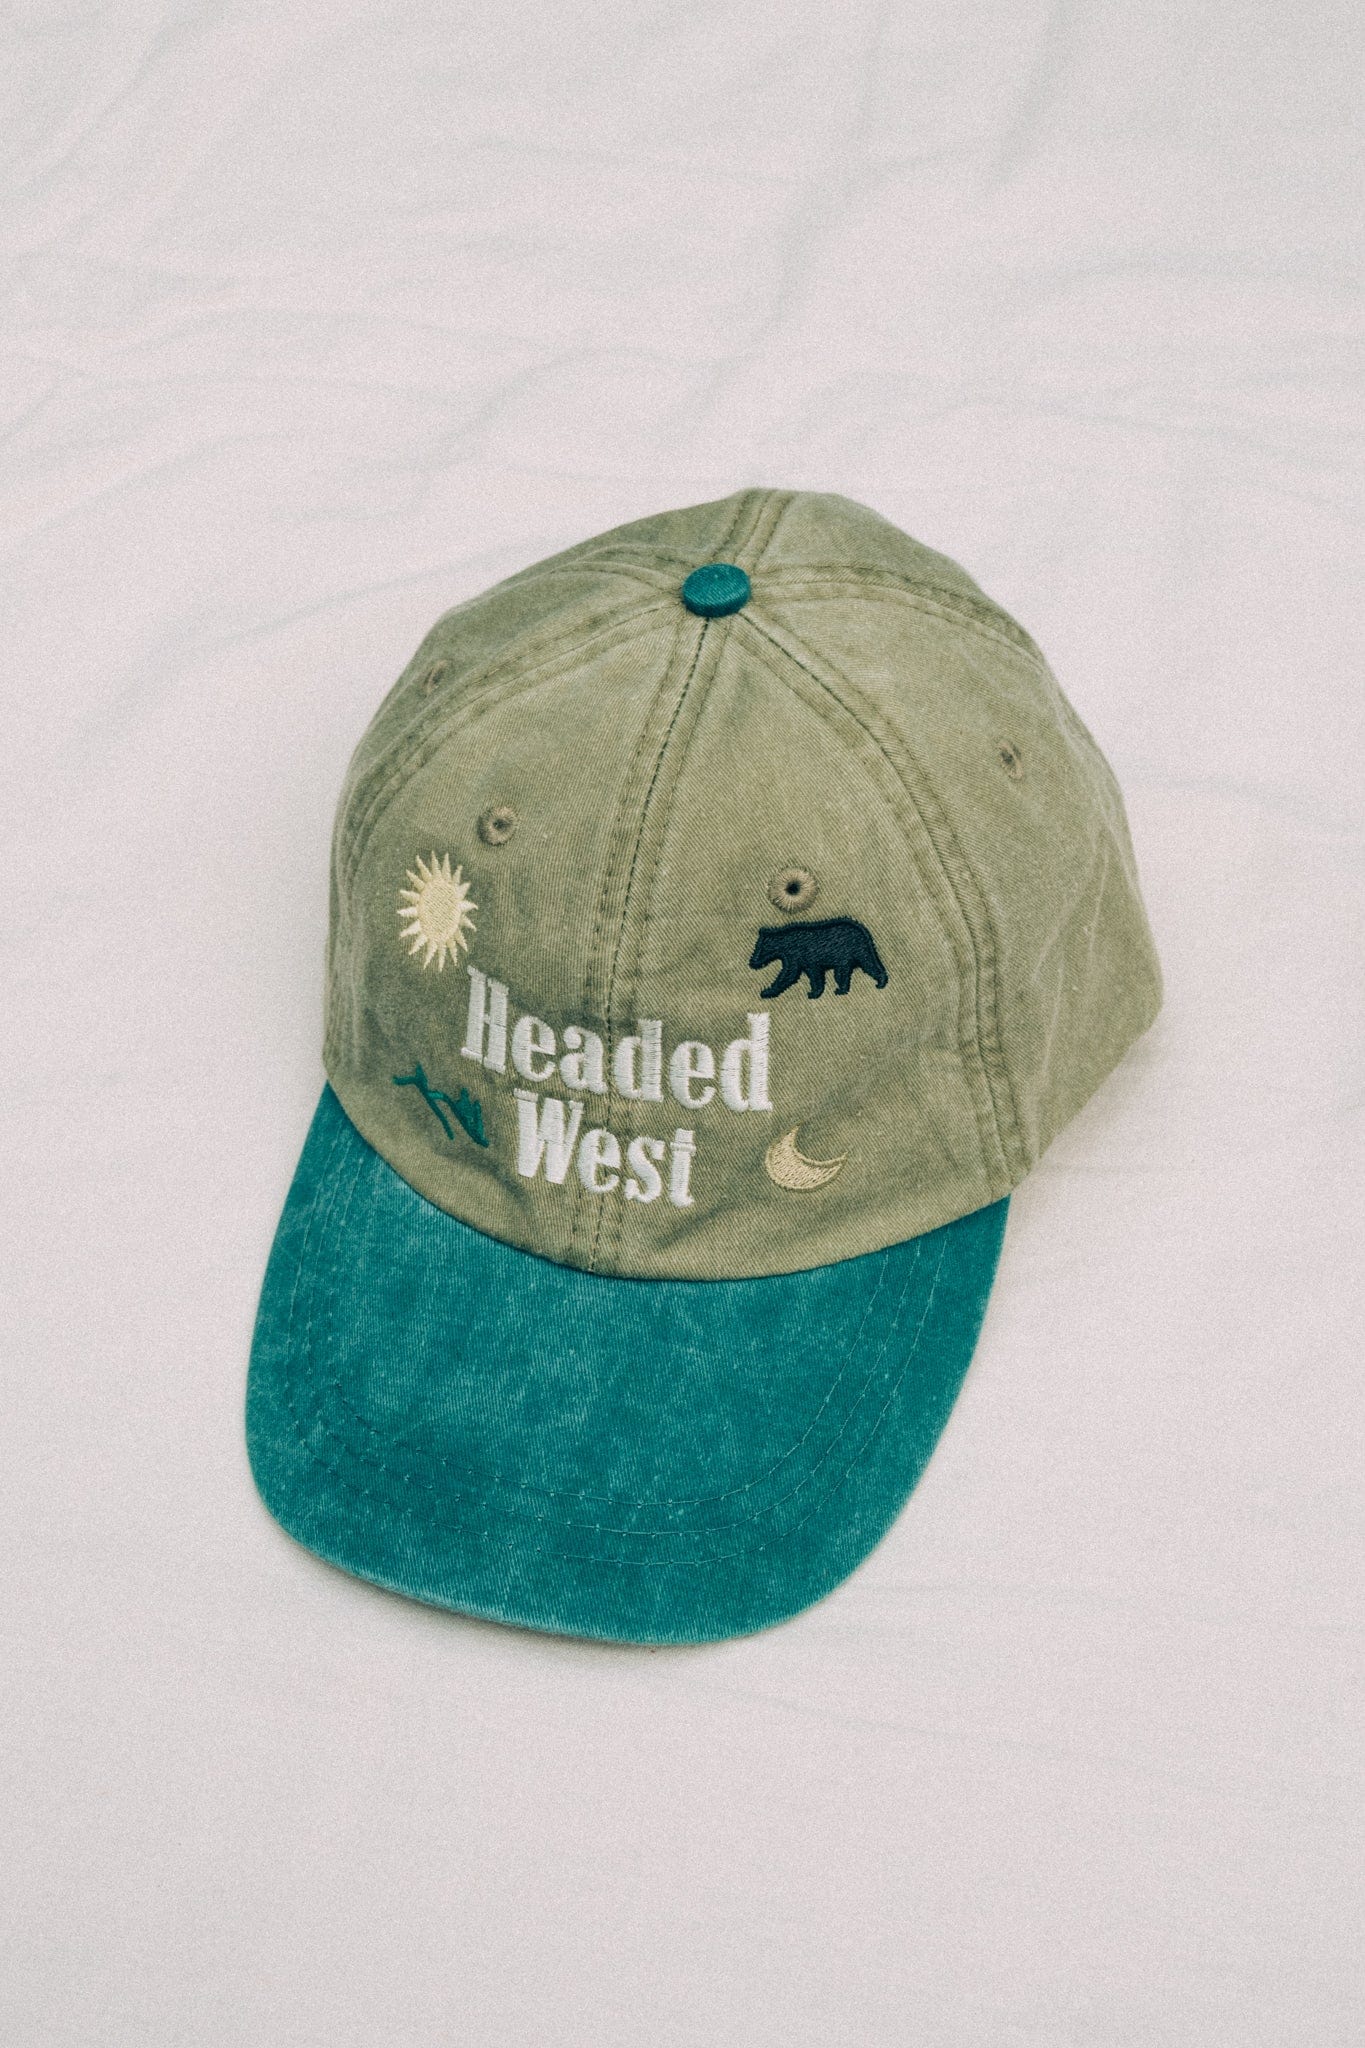 Adventure Hat (Head West)